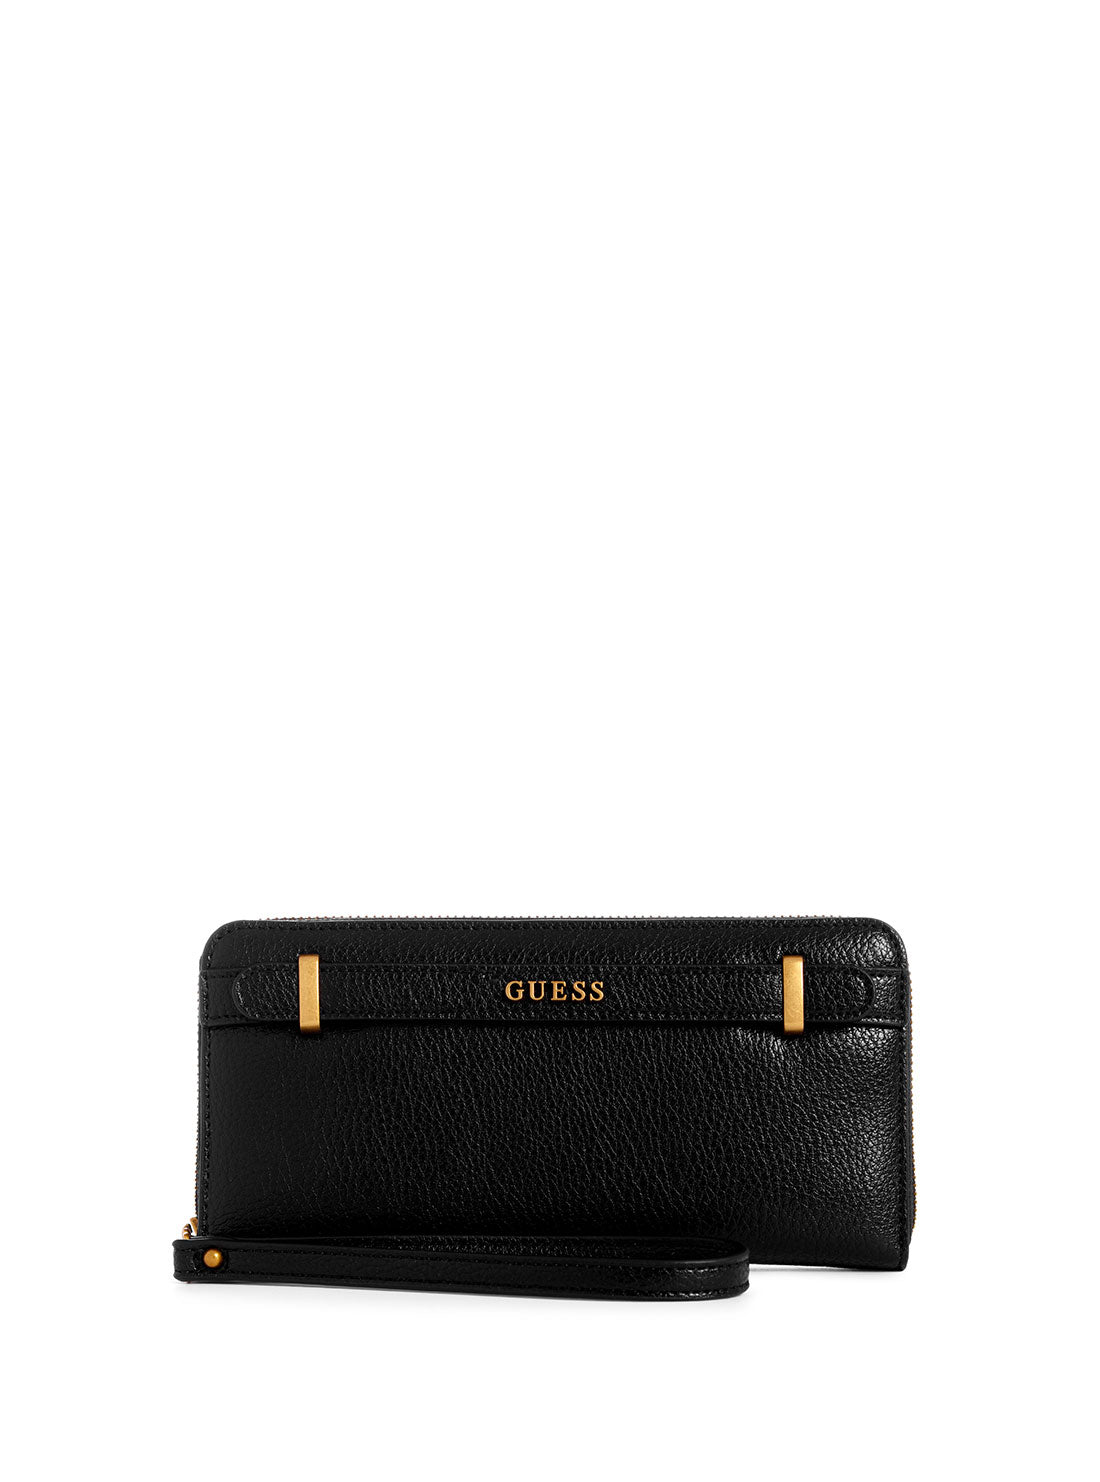 GUESS Women's Black Sestri Large Wallet BB898546 Front View